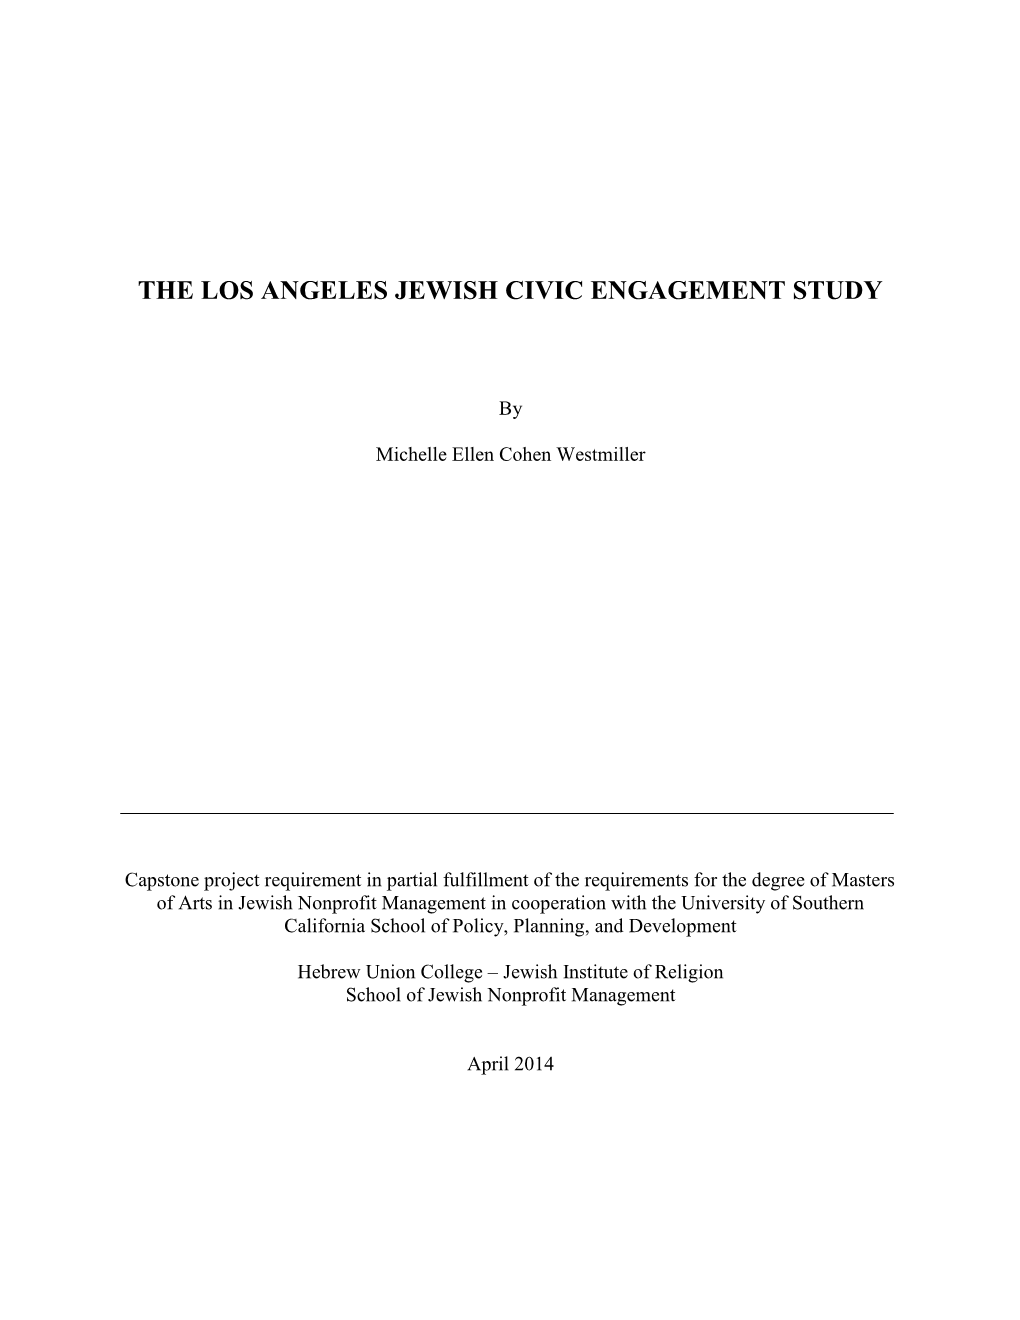 The Los Angeles Jewish Civic Engagement Study